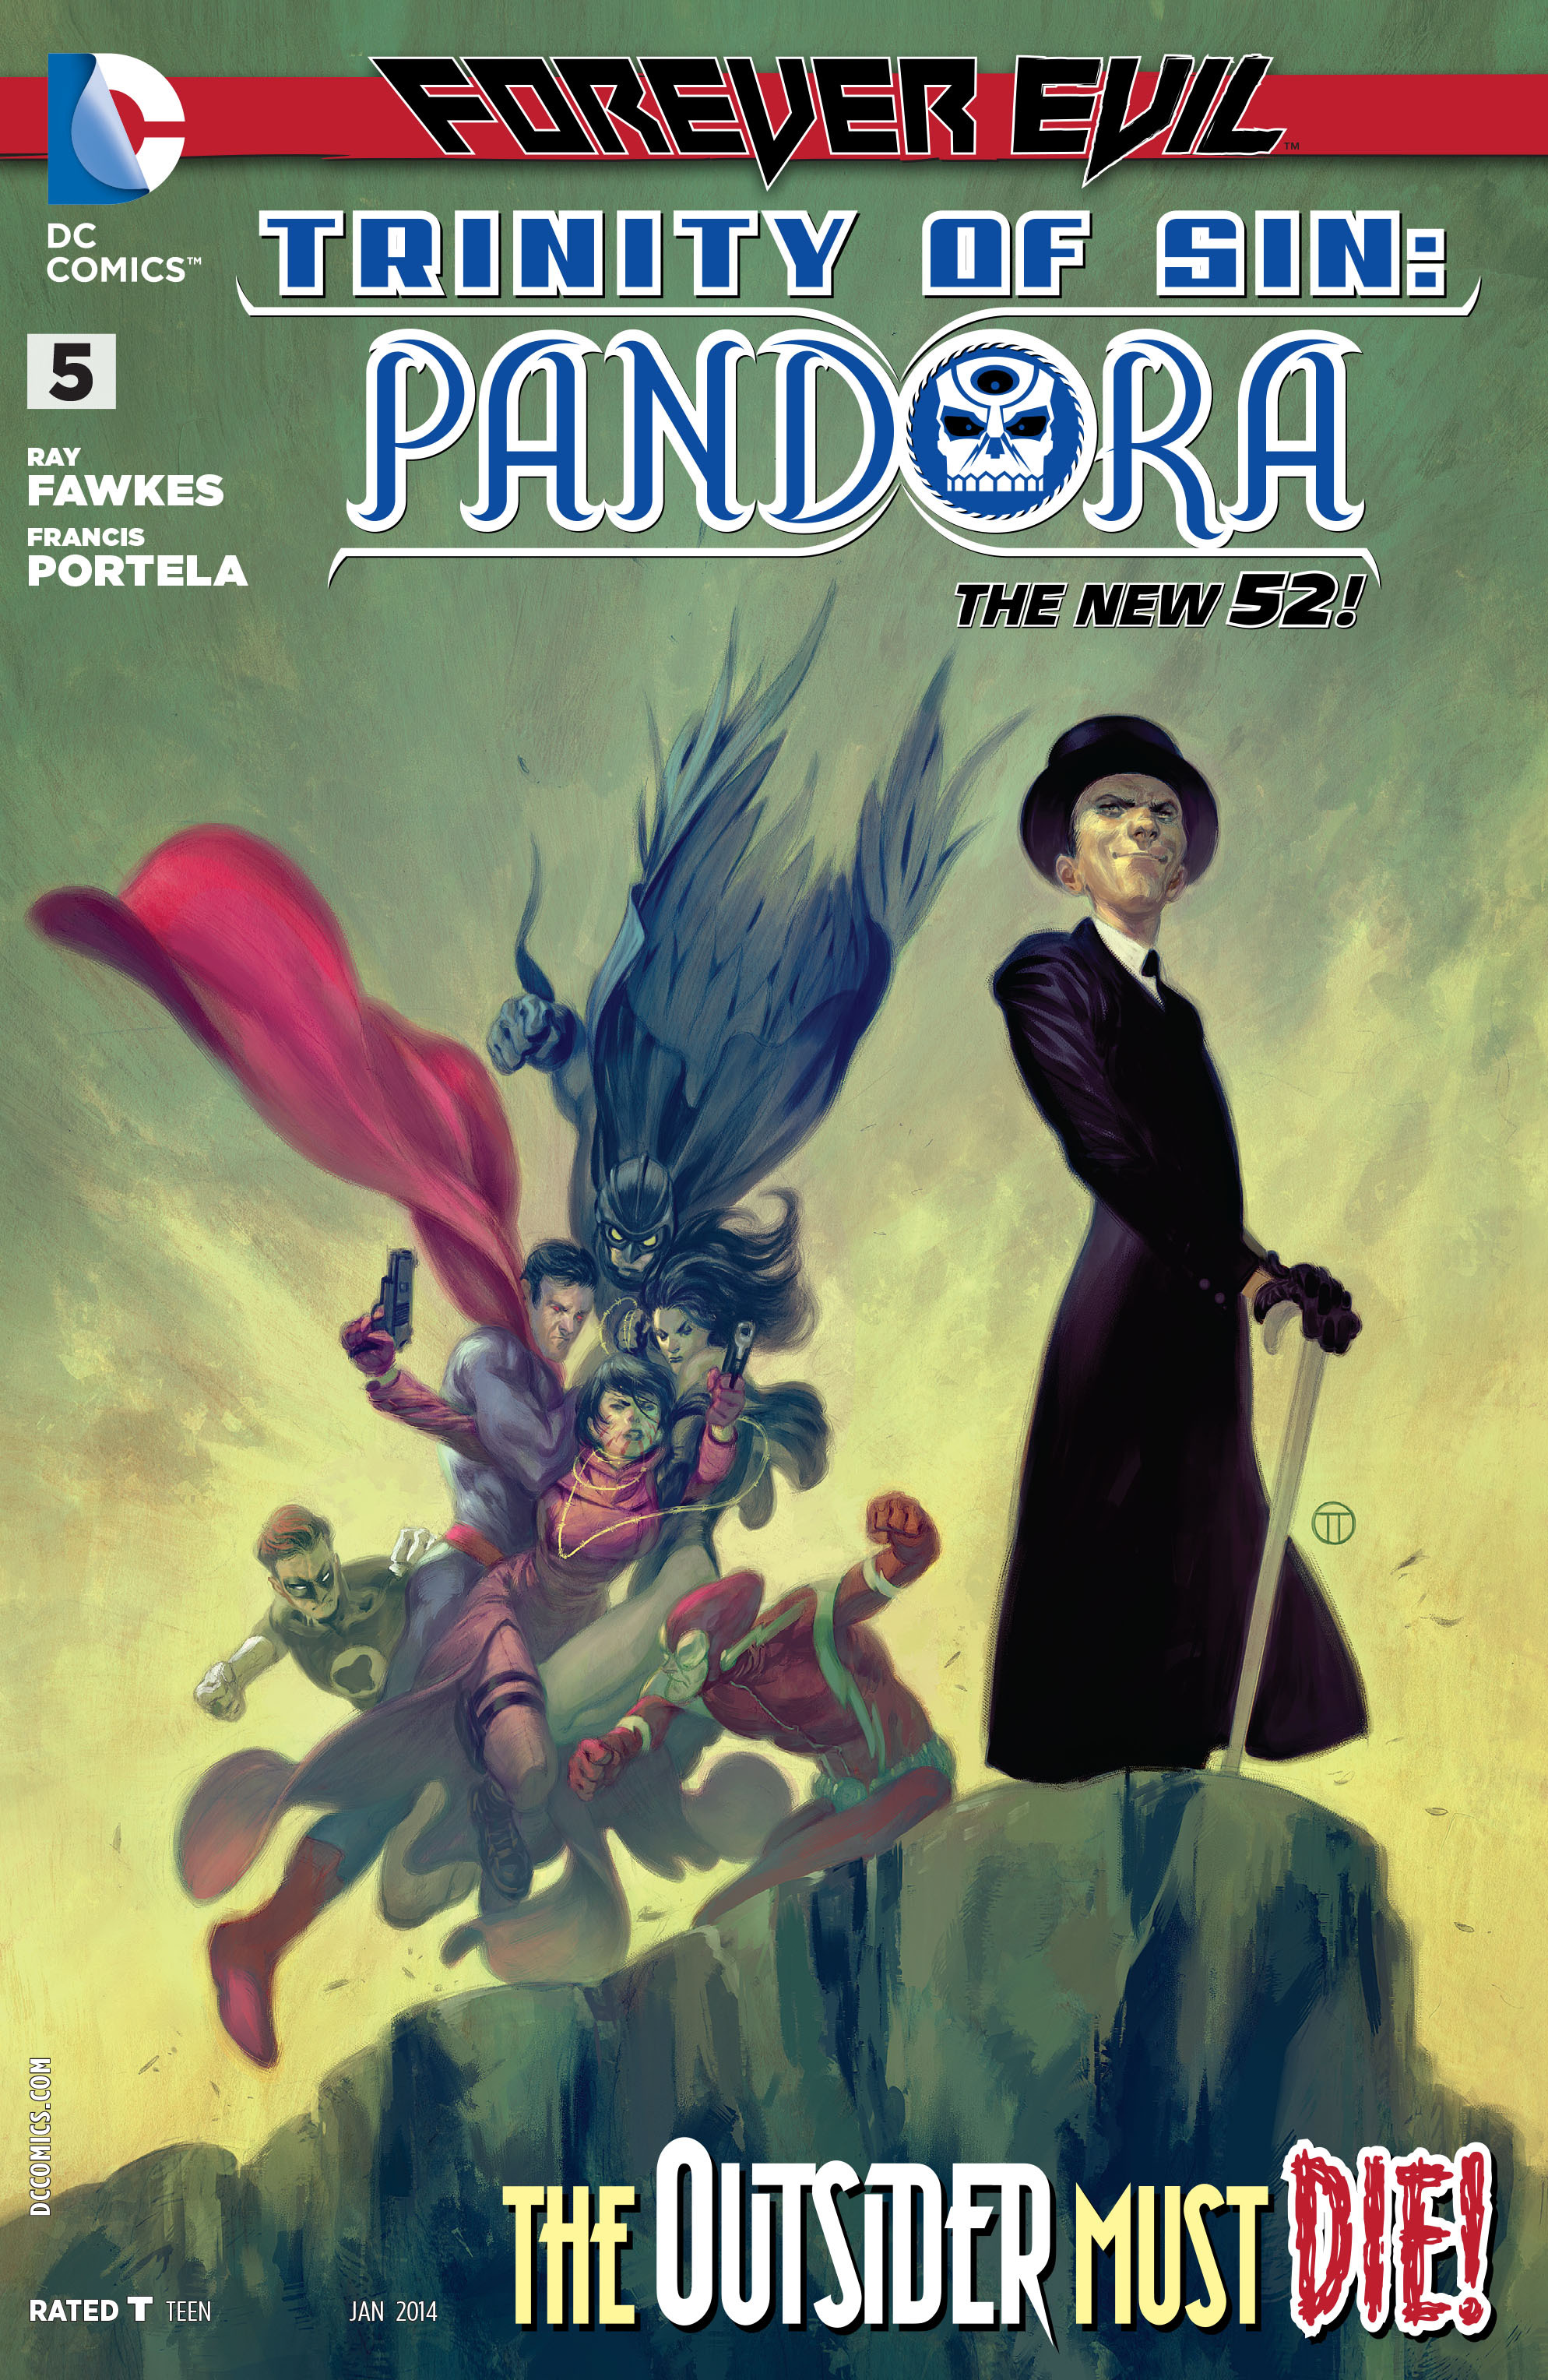 Trinity of Pandora (Volume 1) Issue 5 | Shazam Wiki | Fandom